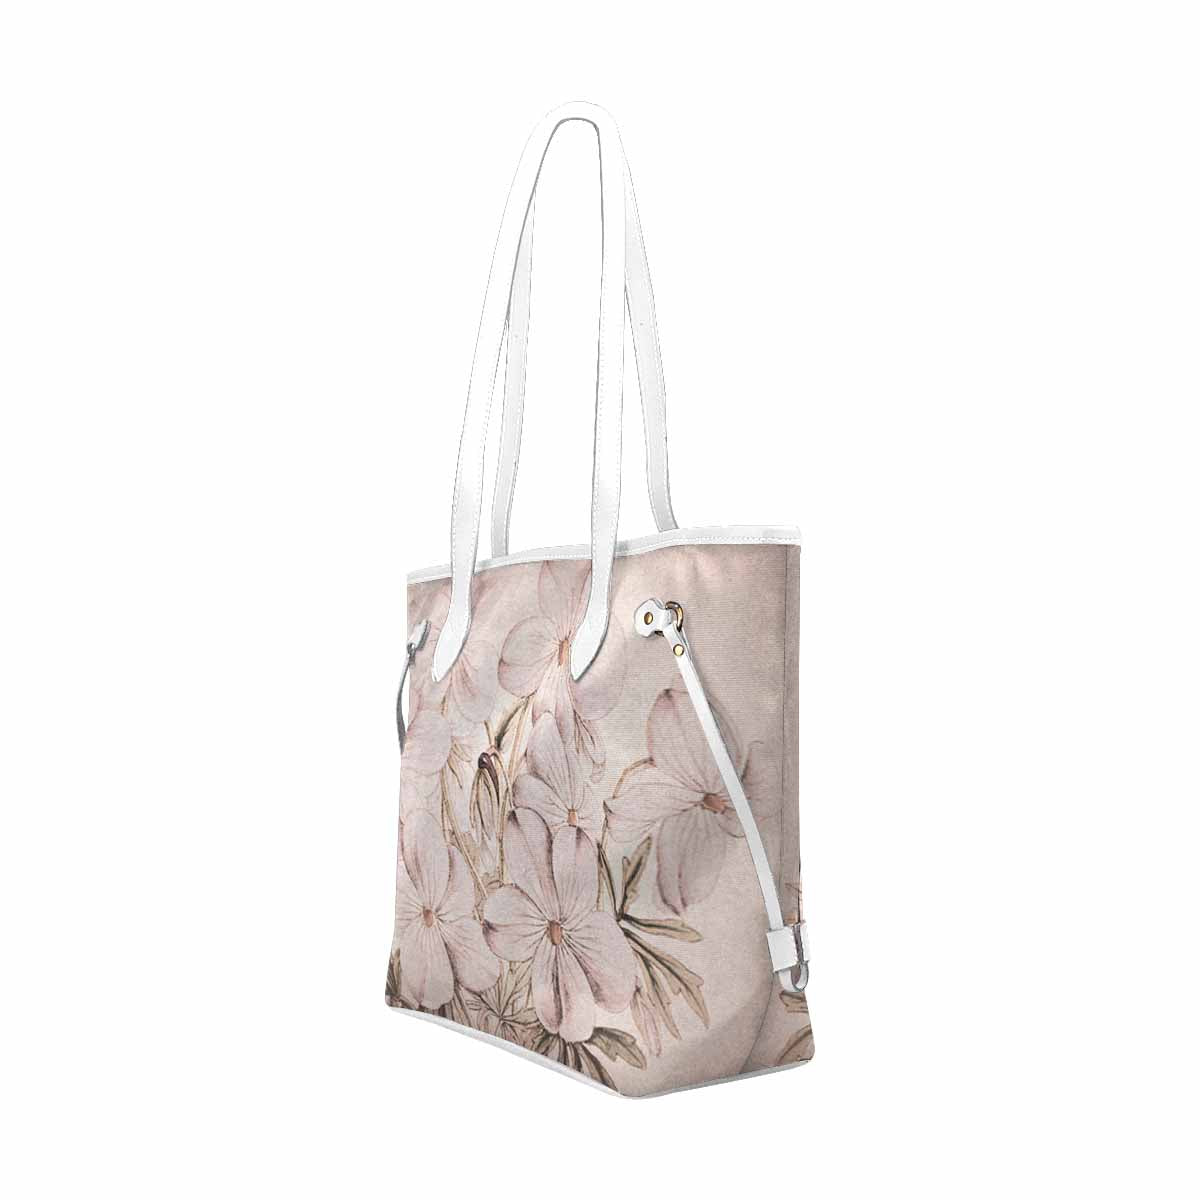 Vintage Floral Handbag, Classic Handbag, Mod 1695361 Design 13x, WHITE TRIM